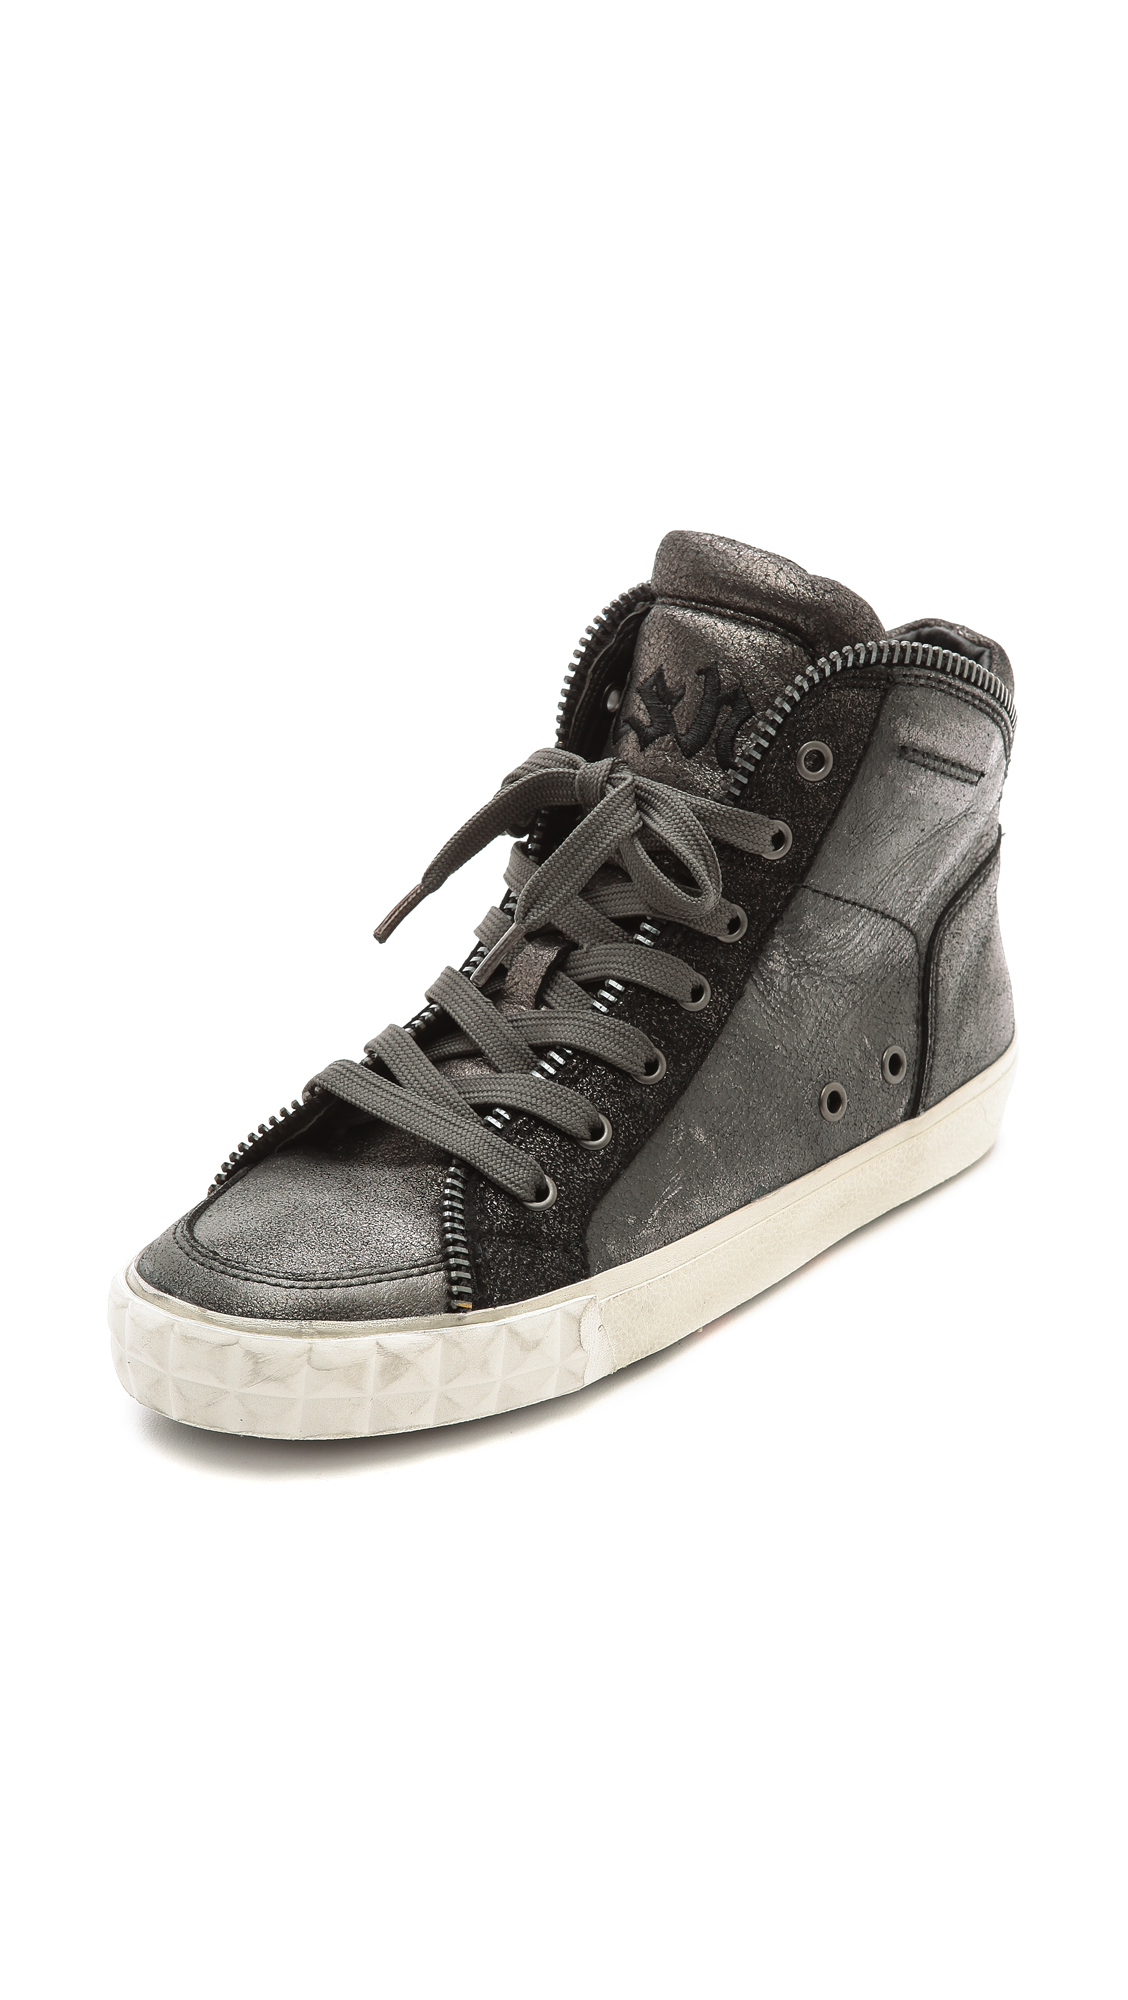 Lyst - Ash Shake High Top Zipper Sneakers - Black/Graphite/Graphite in ...